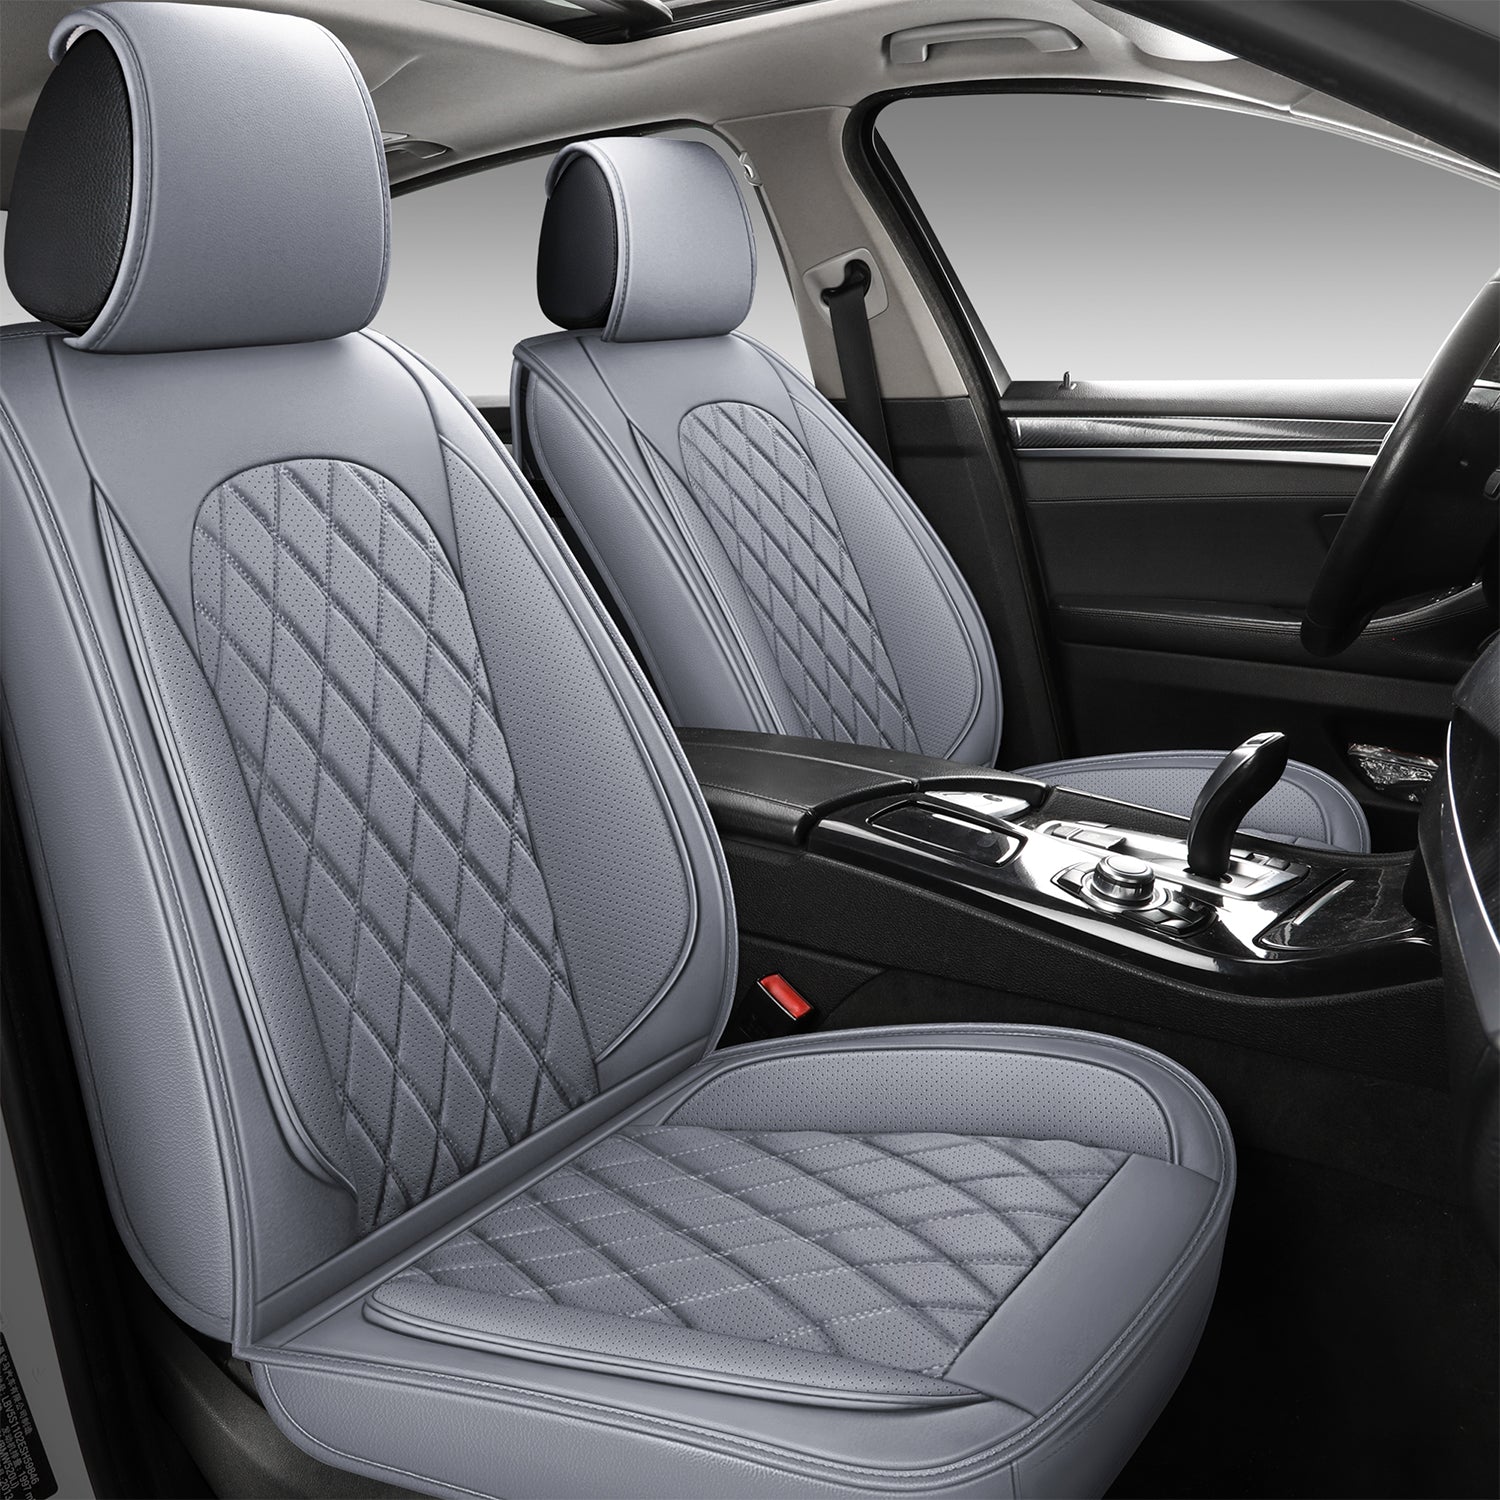 GM-DESIGN Linen Car Seat Cushion 3 Seat - Front Rear Car Seat Cushion Cover  - Waterproof